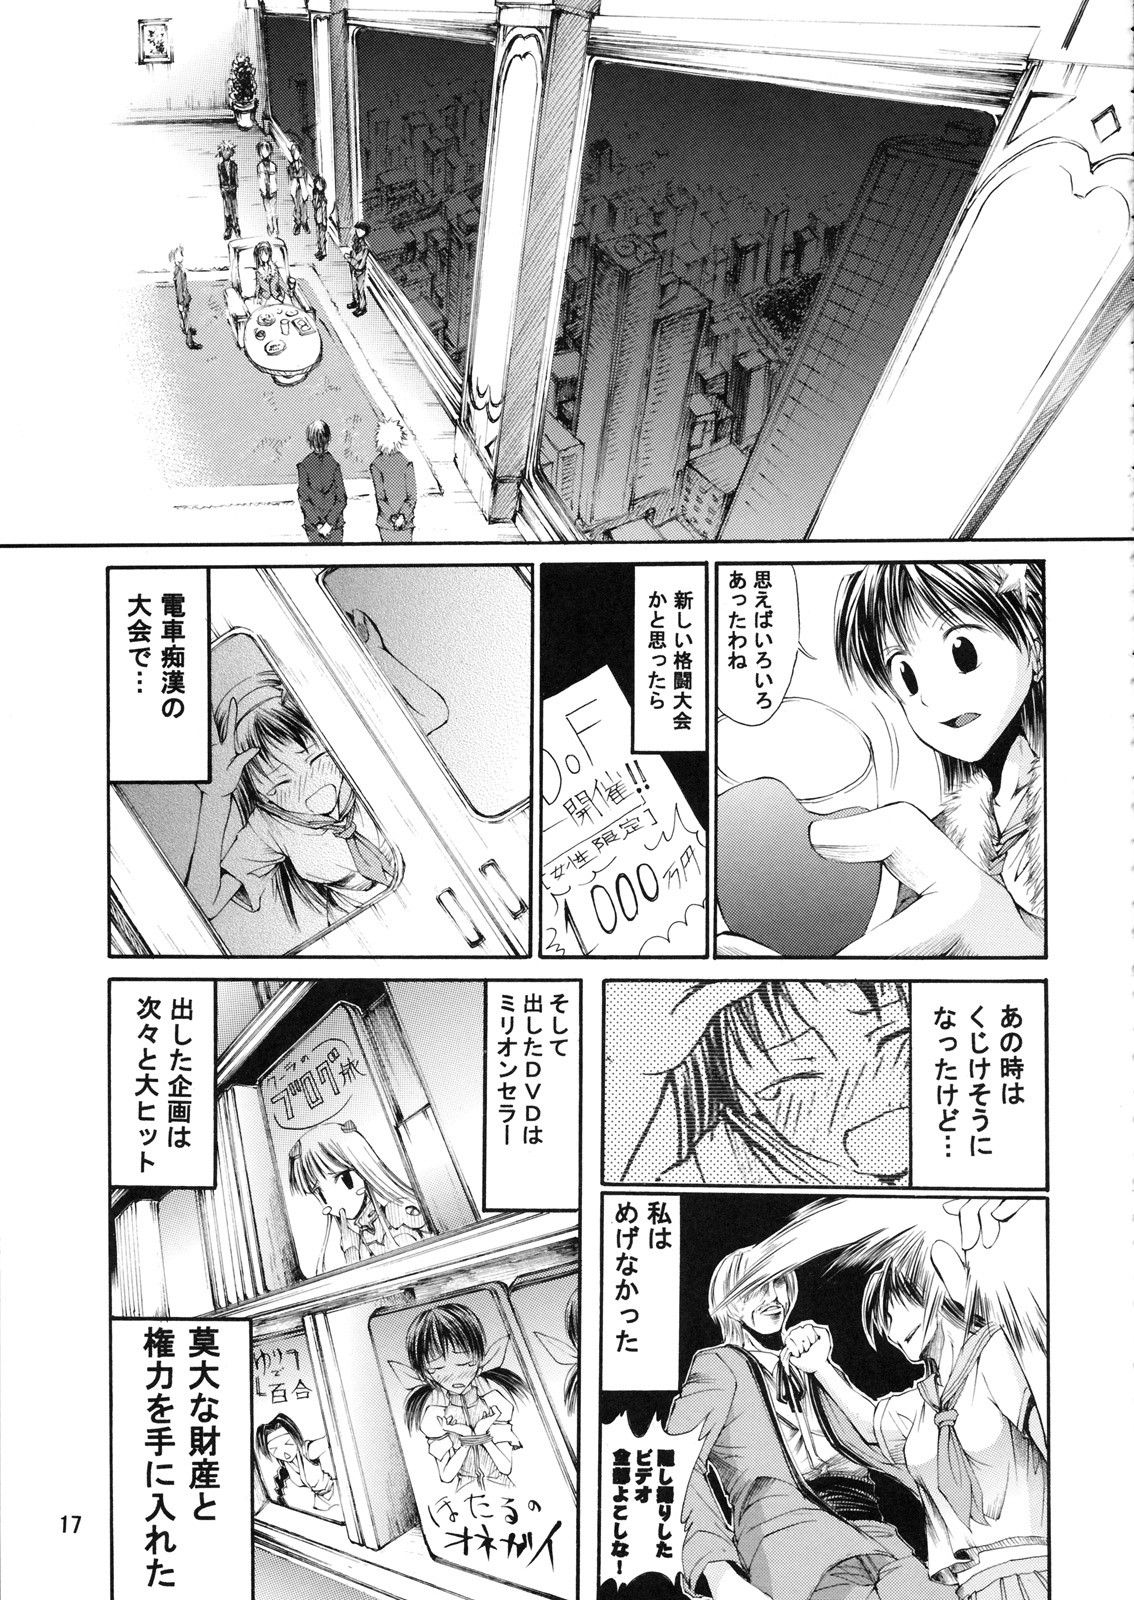 DOF Mai hentai manga picture 12